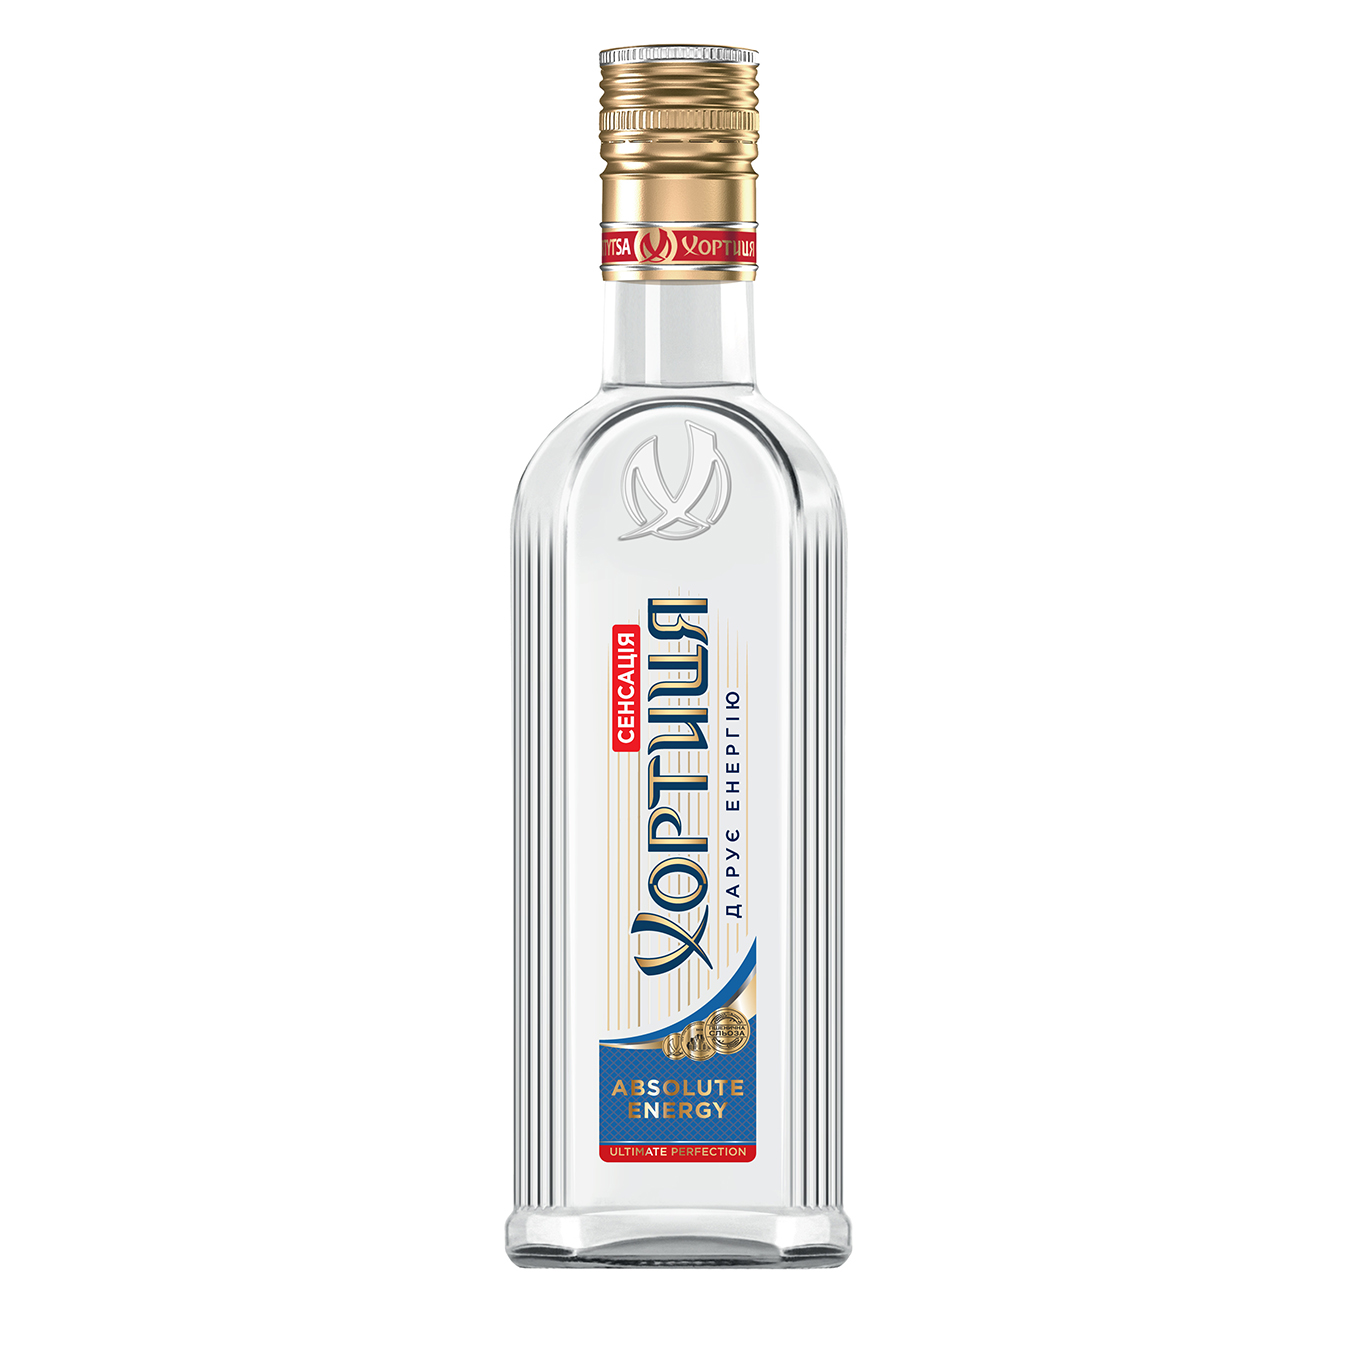 Khortytsia Vodka special Absolute Energy 40% 0.5l